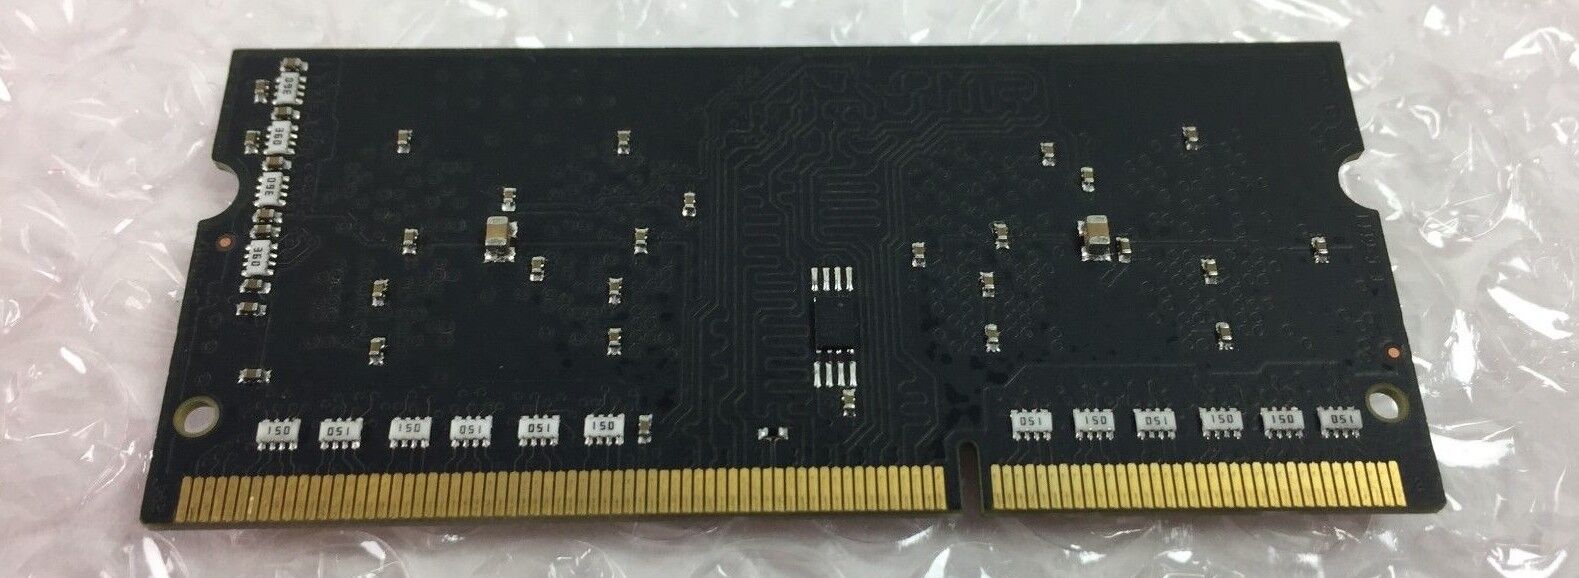 Hynix 2GB 1600MHz PC3-12800 DDR3 SDRAM Memory HMT425S6AFR6APB For Apple Macbook